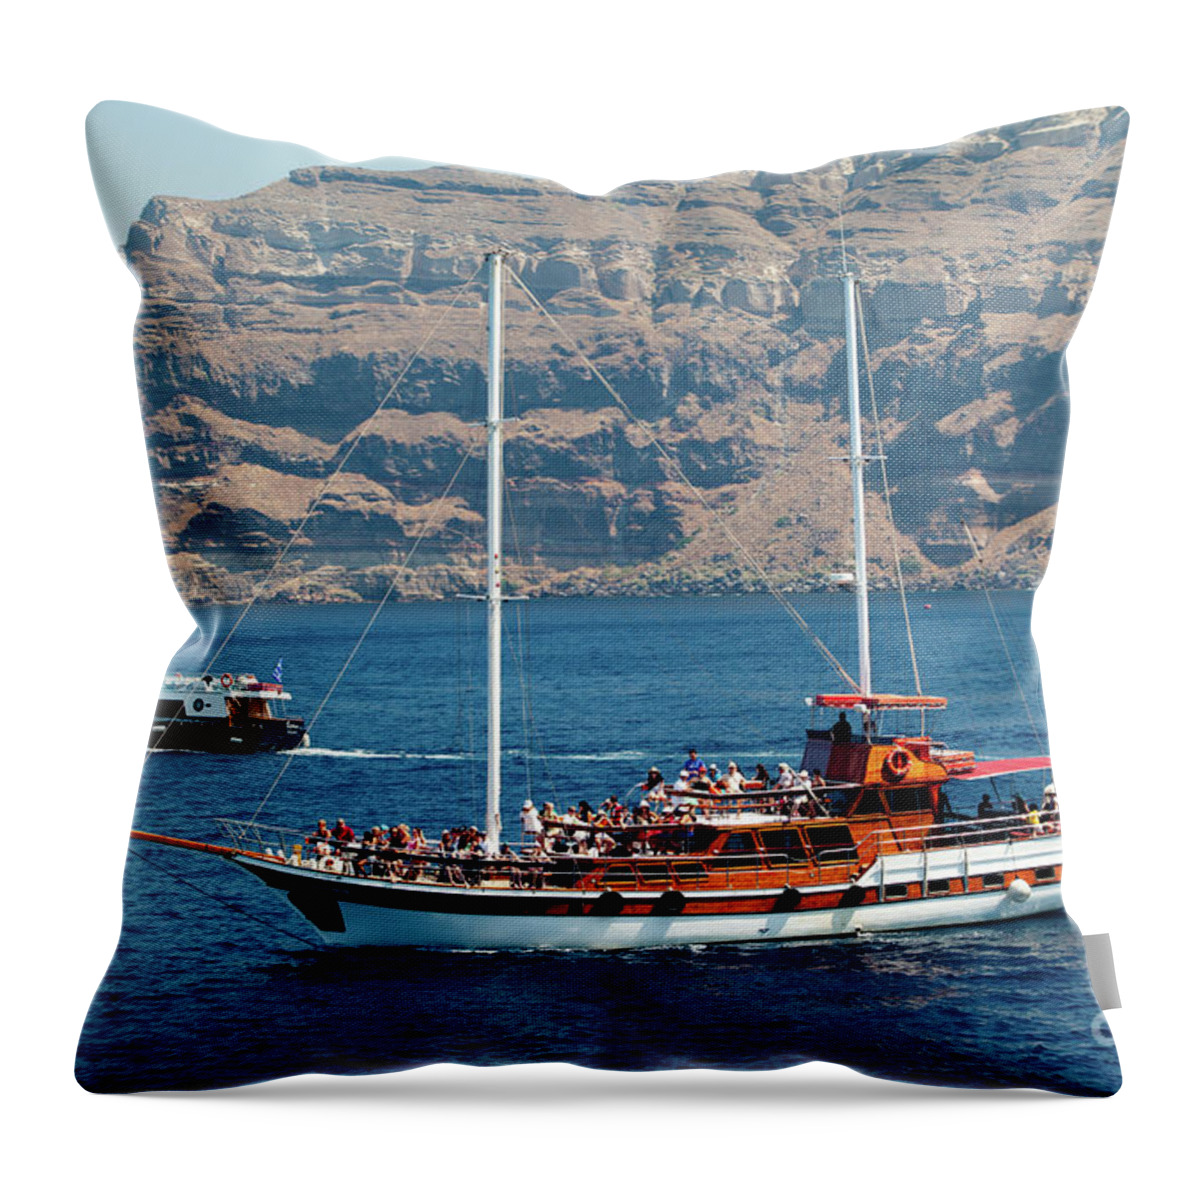 Santorini Throw Pillow featuring the photograph Santorini - Tourist Boats by Rich S